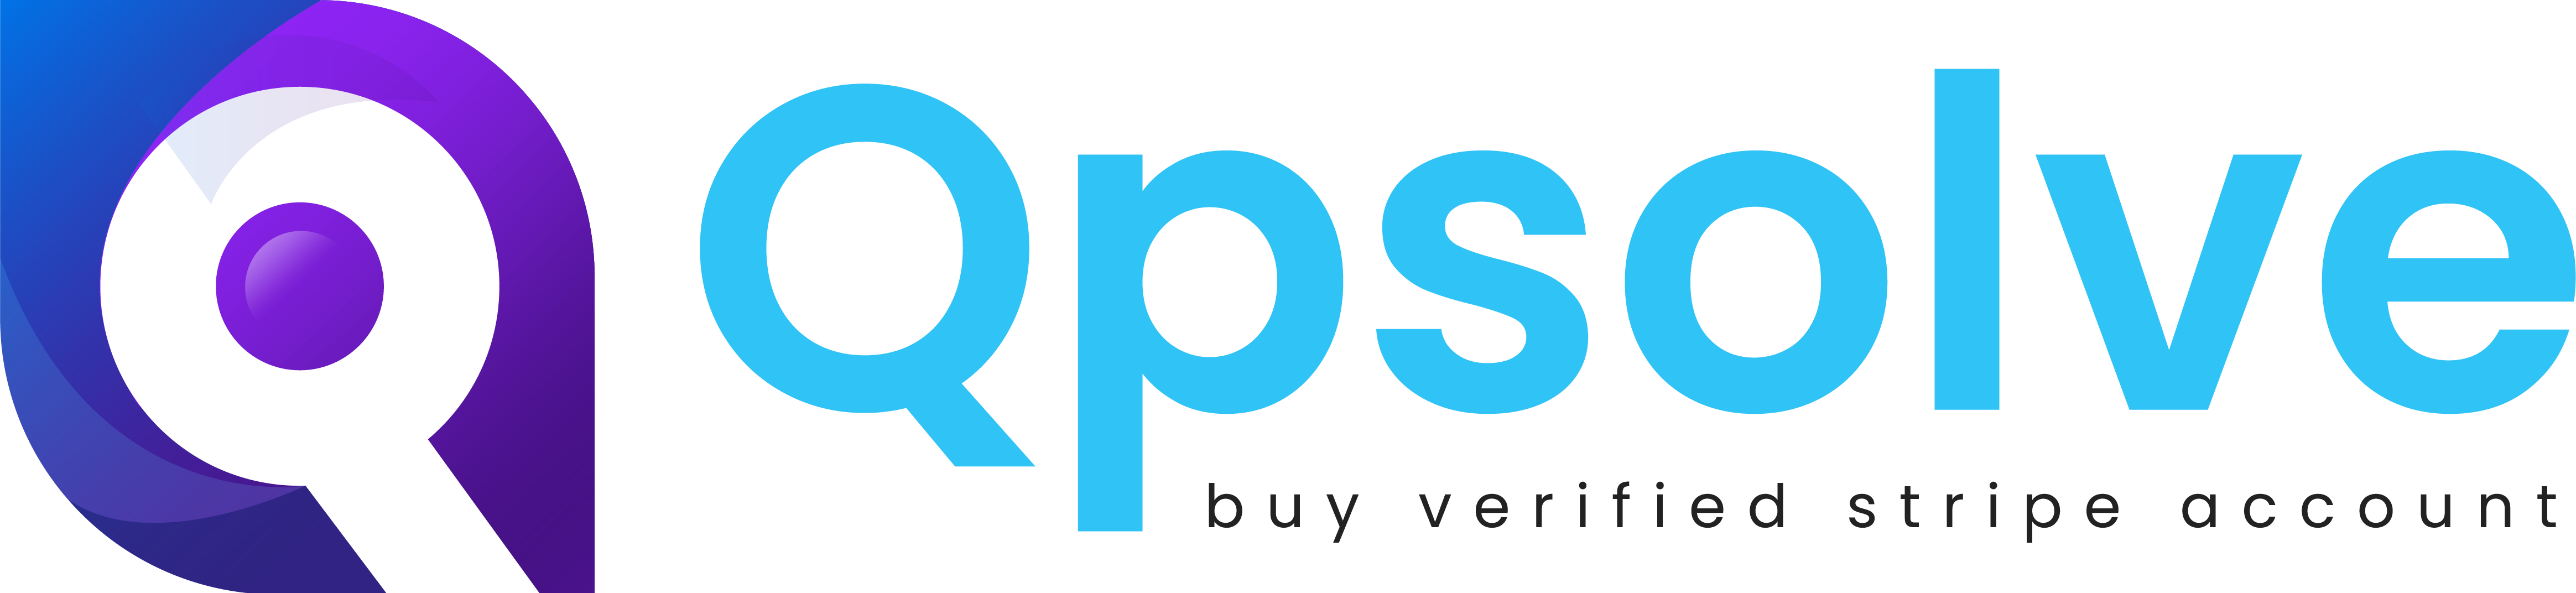 qp logo